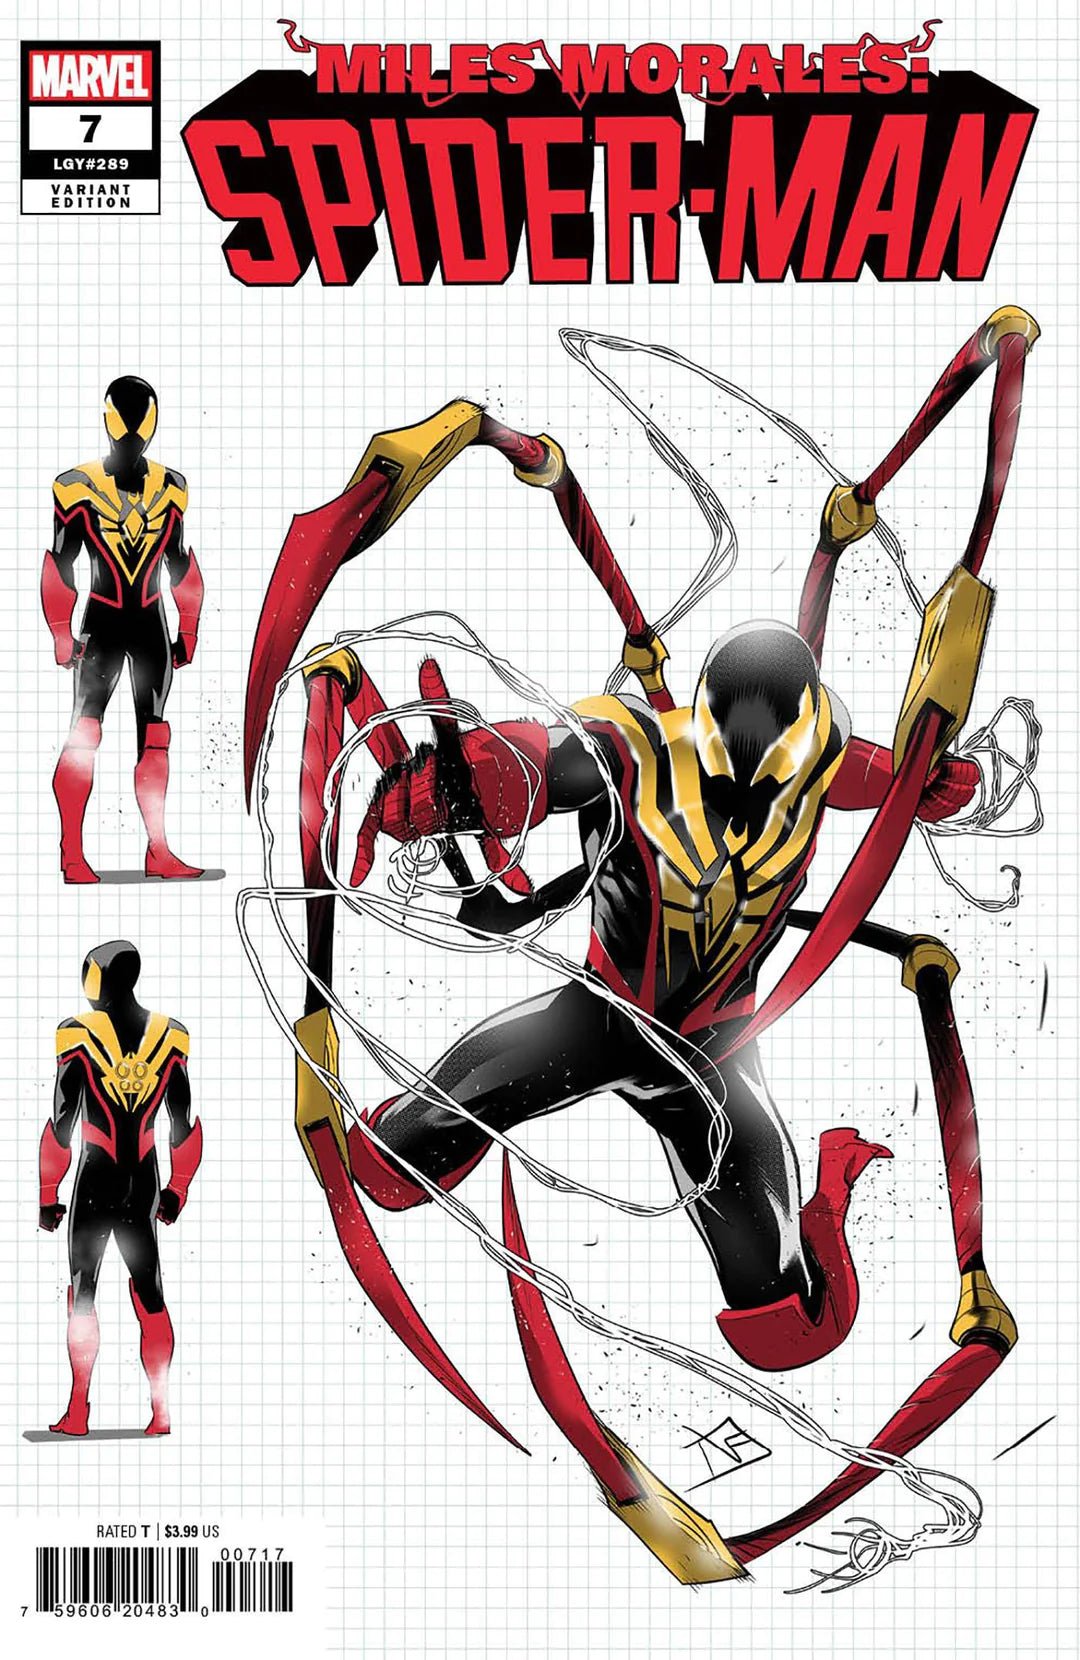 MILES MORALES SPIDER-MAN #7 10 COPY INC VICENTINI DESIGN VAR - FURYCOMIX